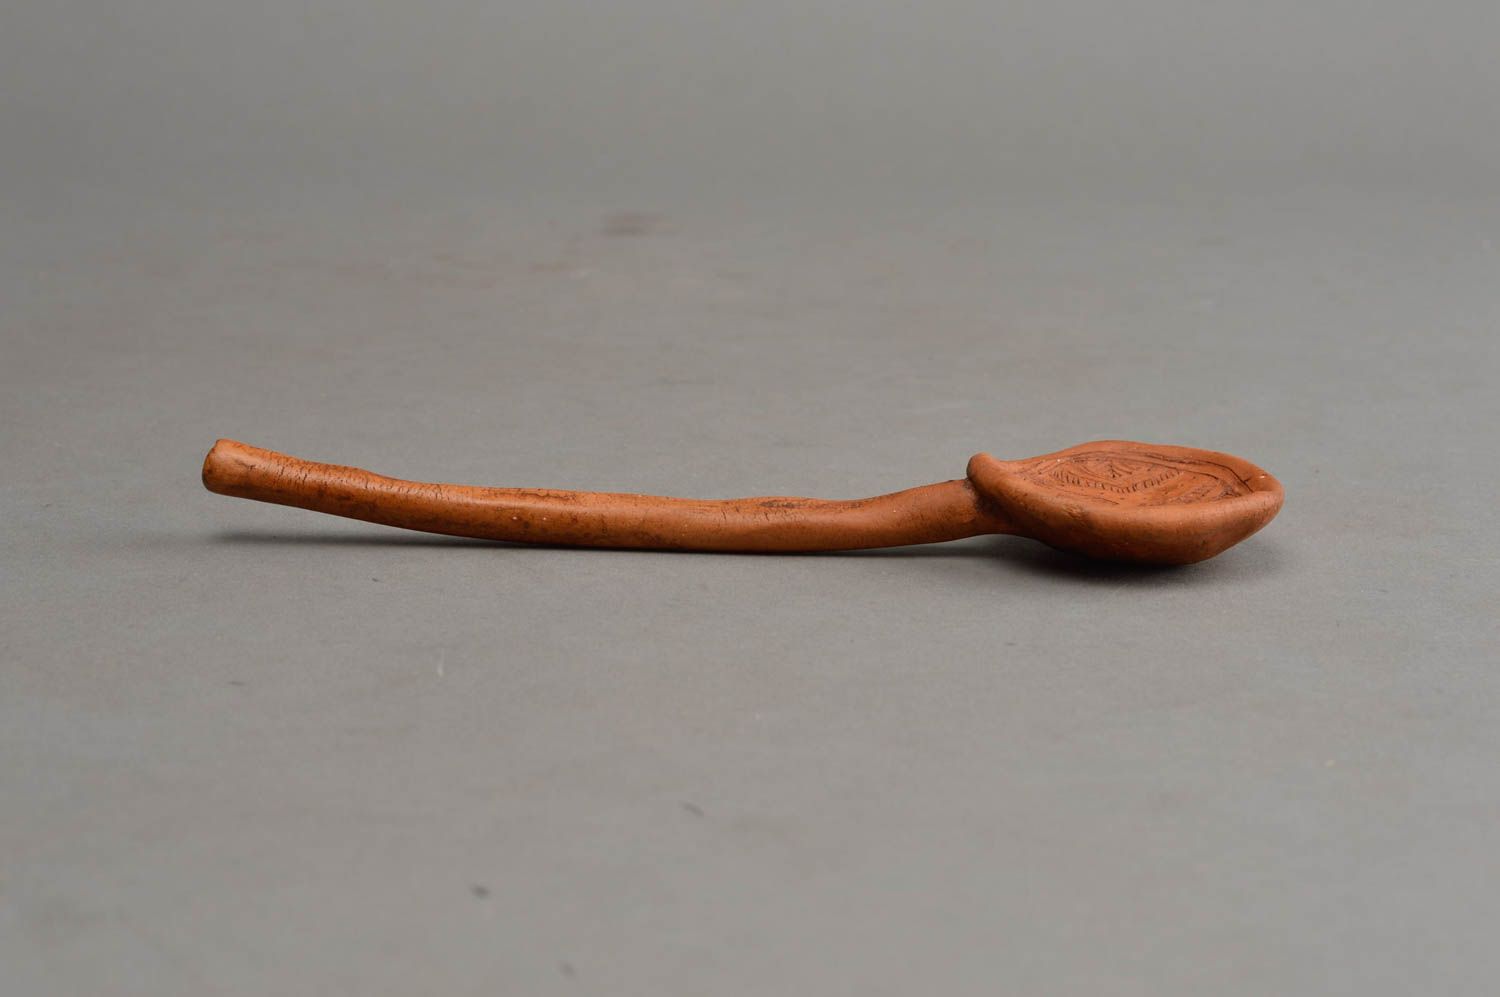 Handmade beautiful spoon unusual utensils made of clay stylish home decor photo 4